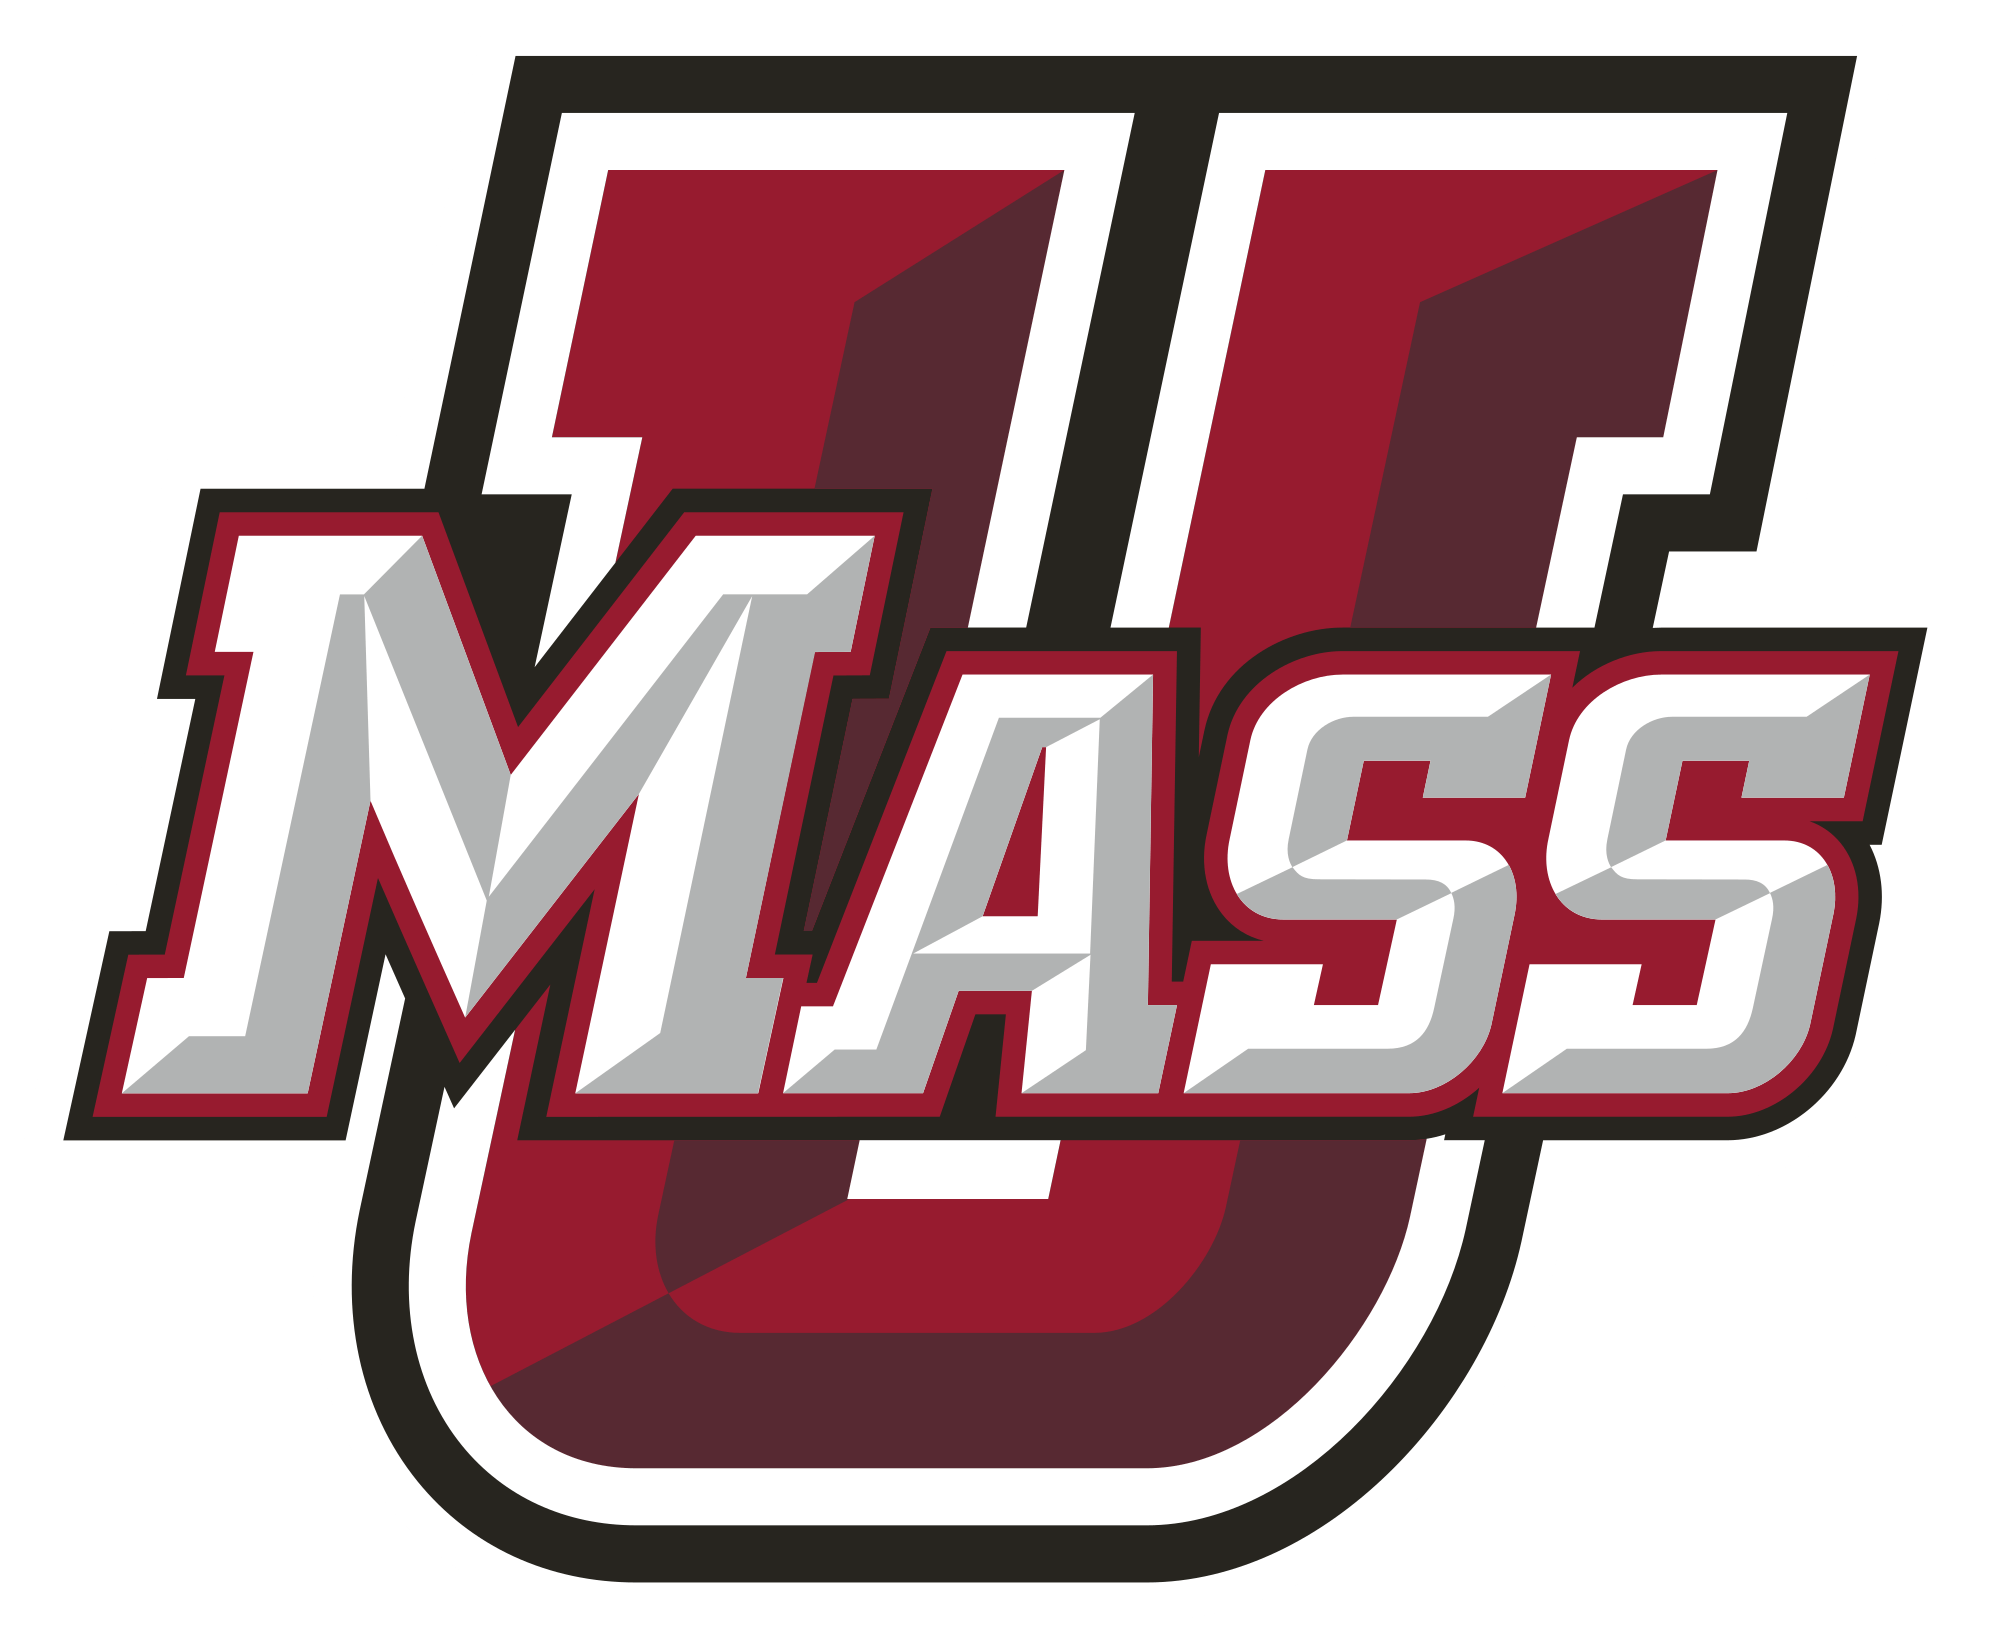 Amherst Logo - UMass Amherst Athletics logo.svg